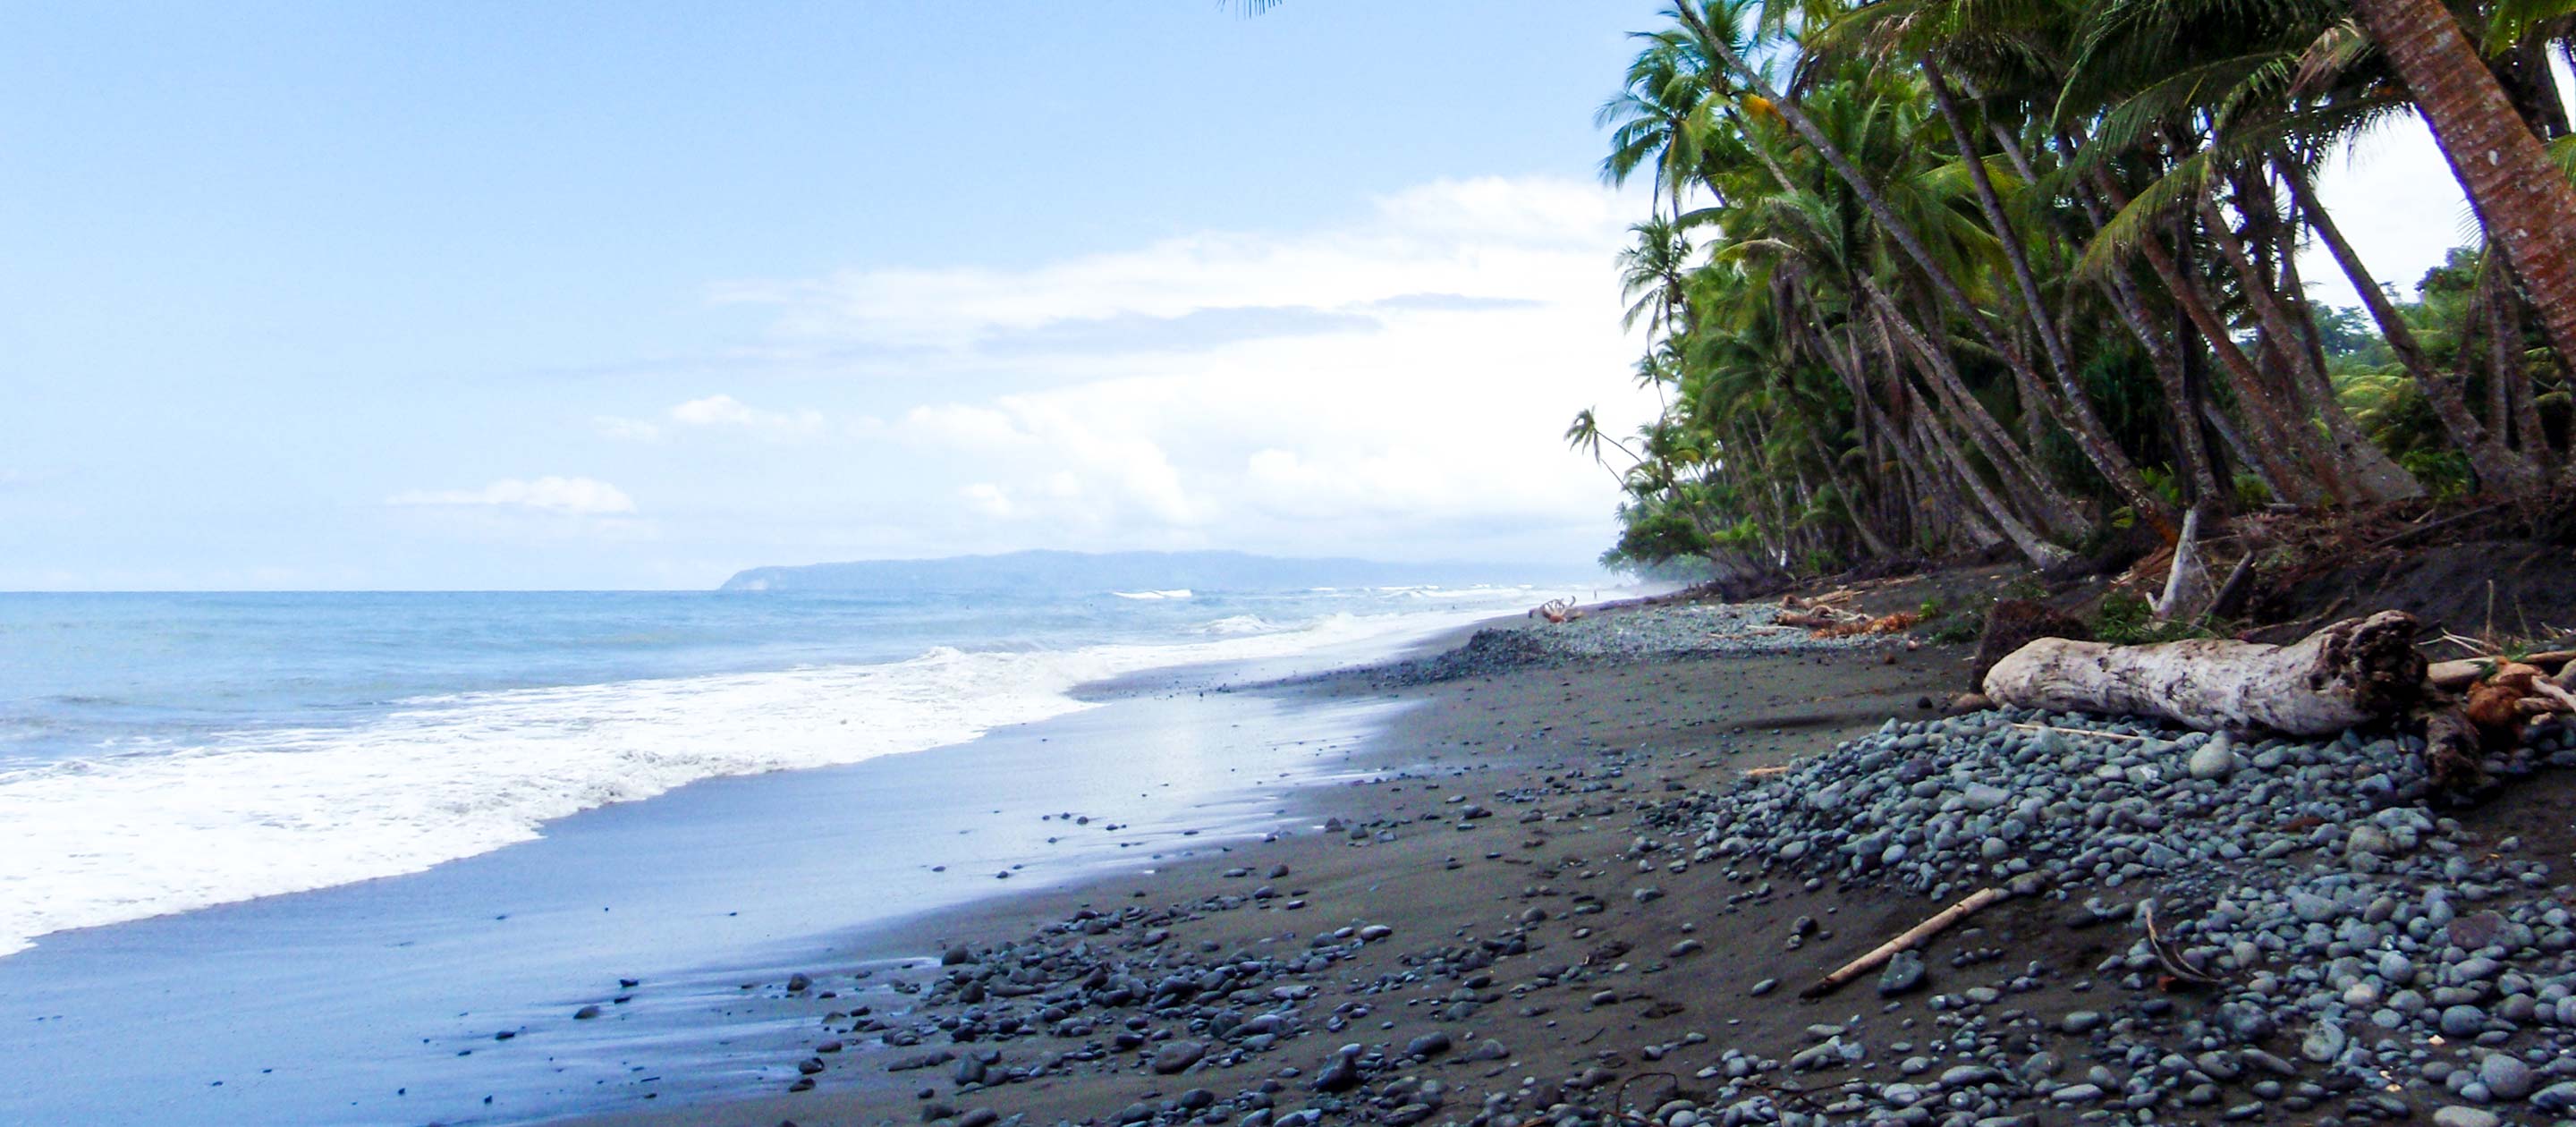 Beach of Punta Banco, Costa Rica